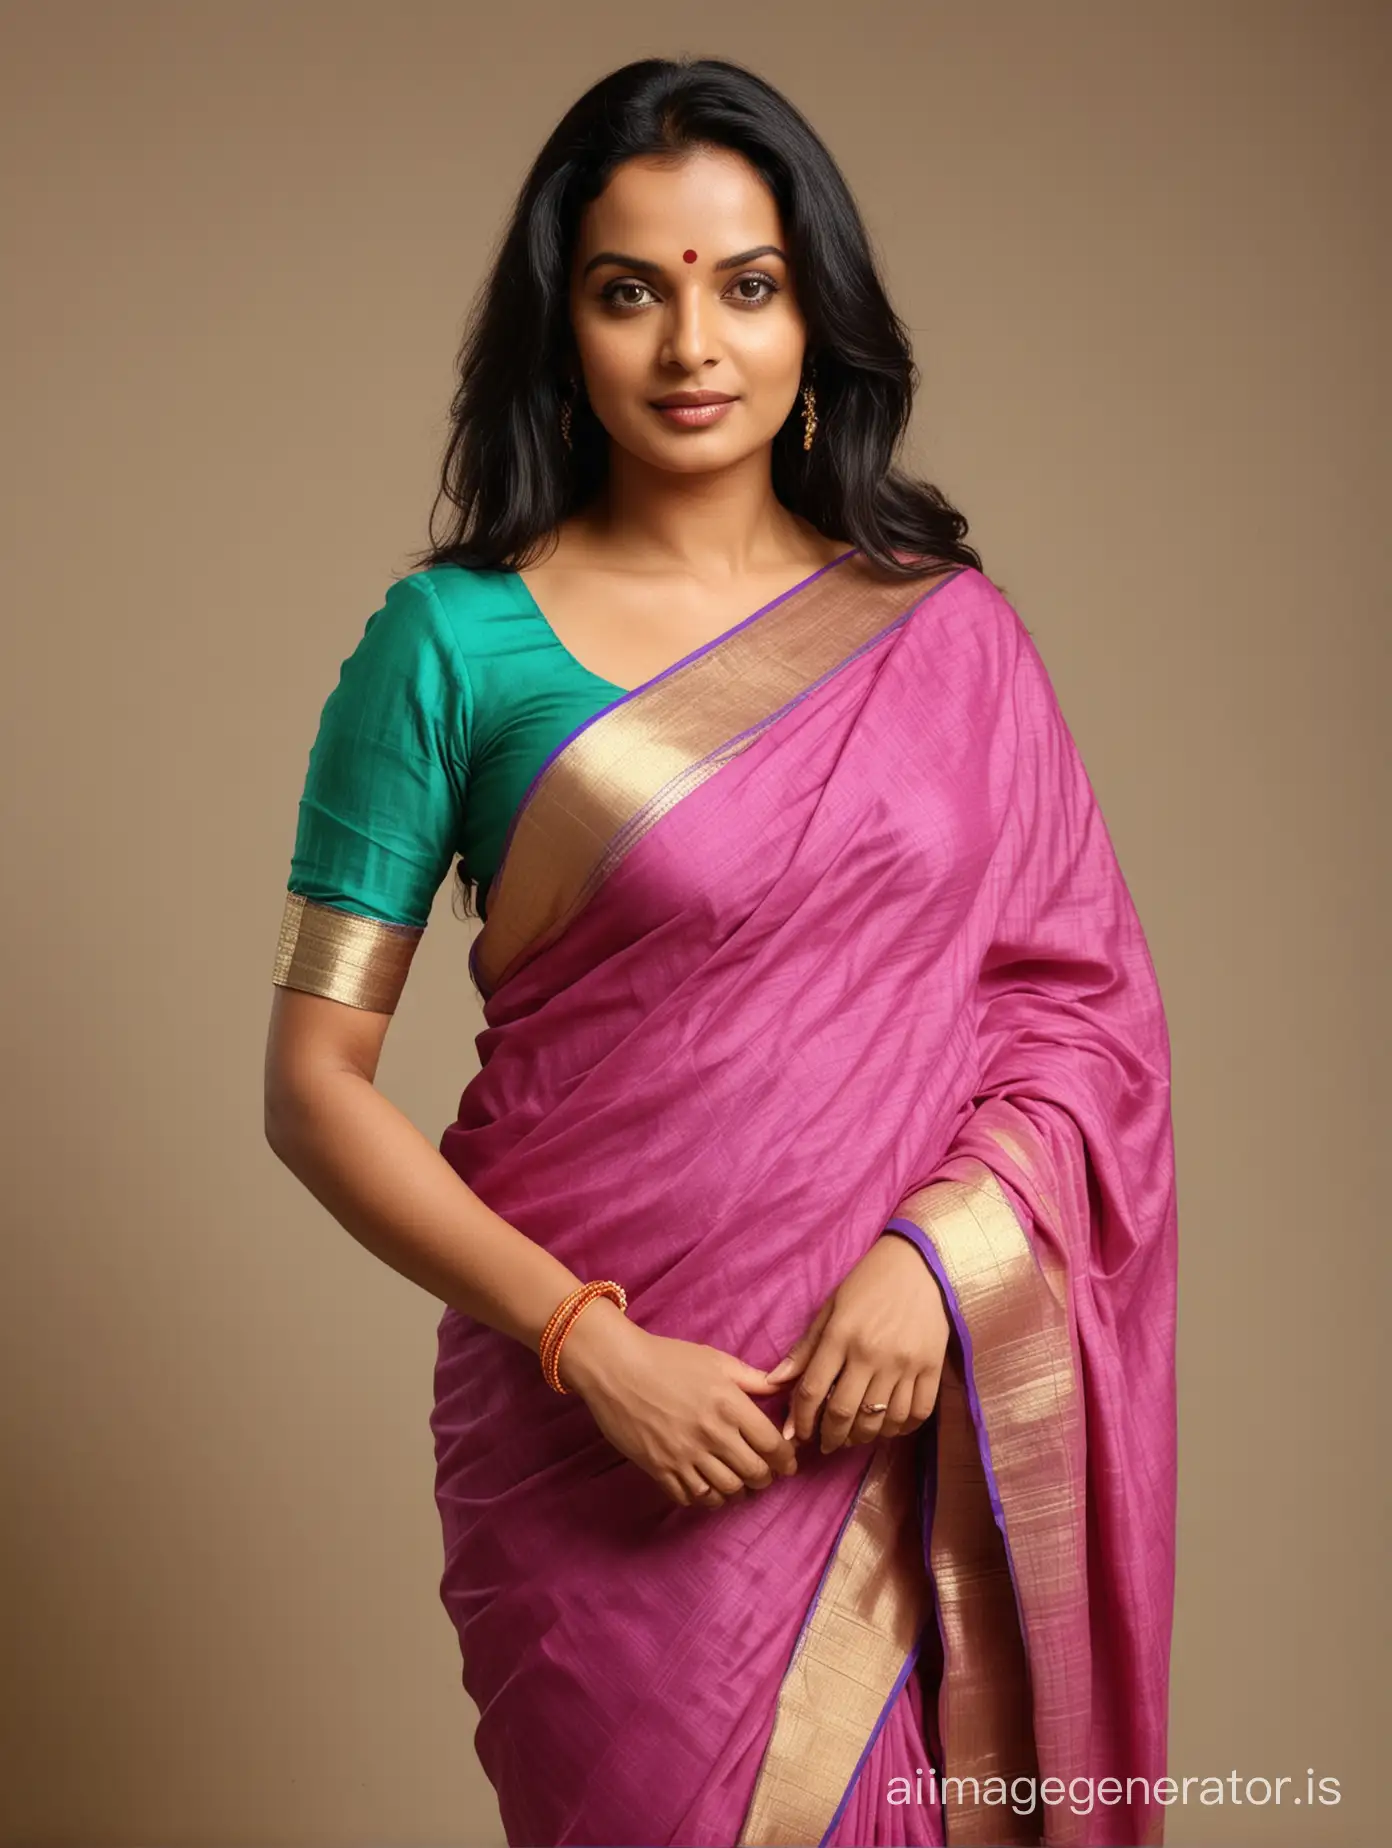 45YearOld-Kerala-Woman-Resembling-Swetha-Menon-in-Saree-Portrait